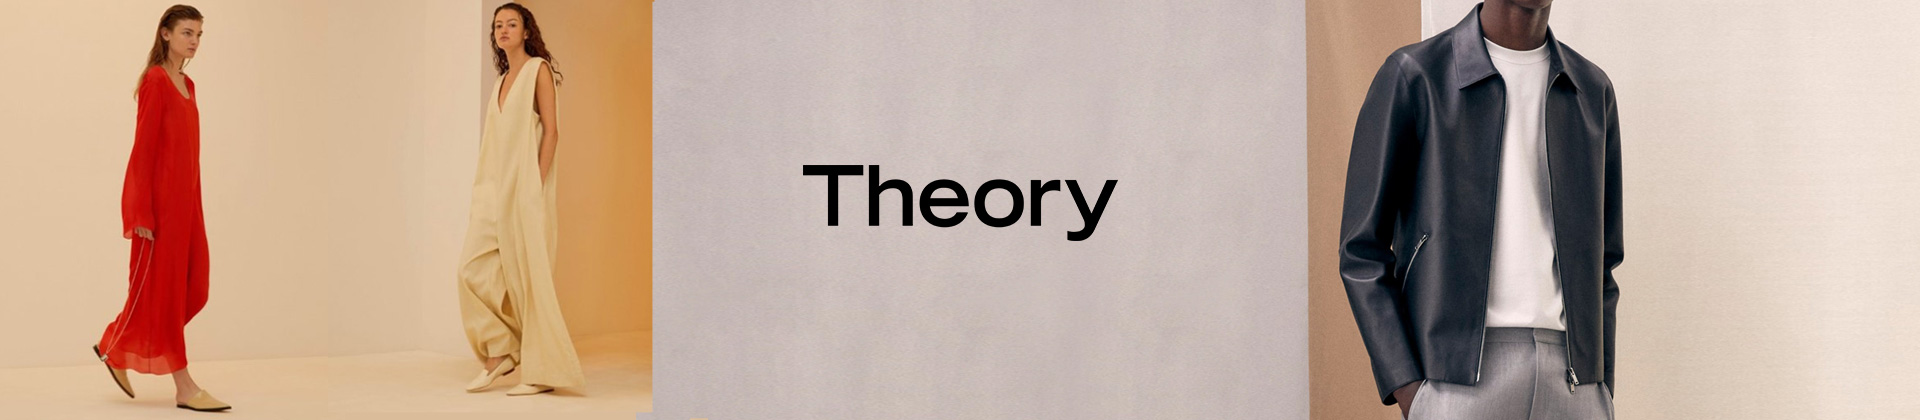 theory_181558.jpg